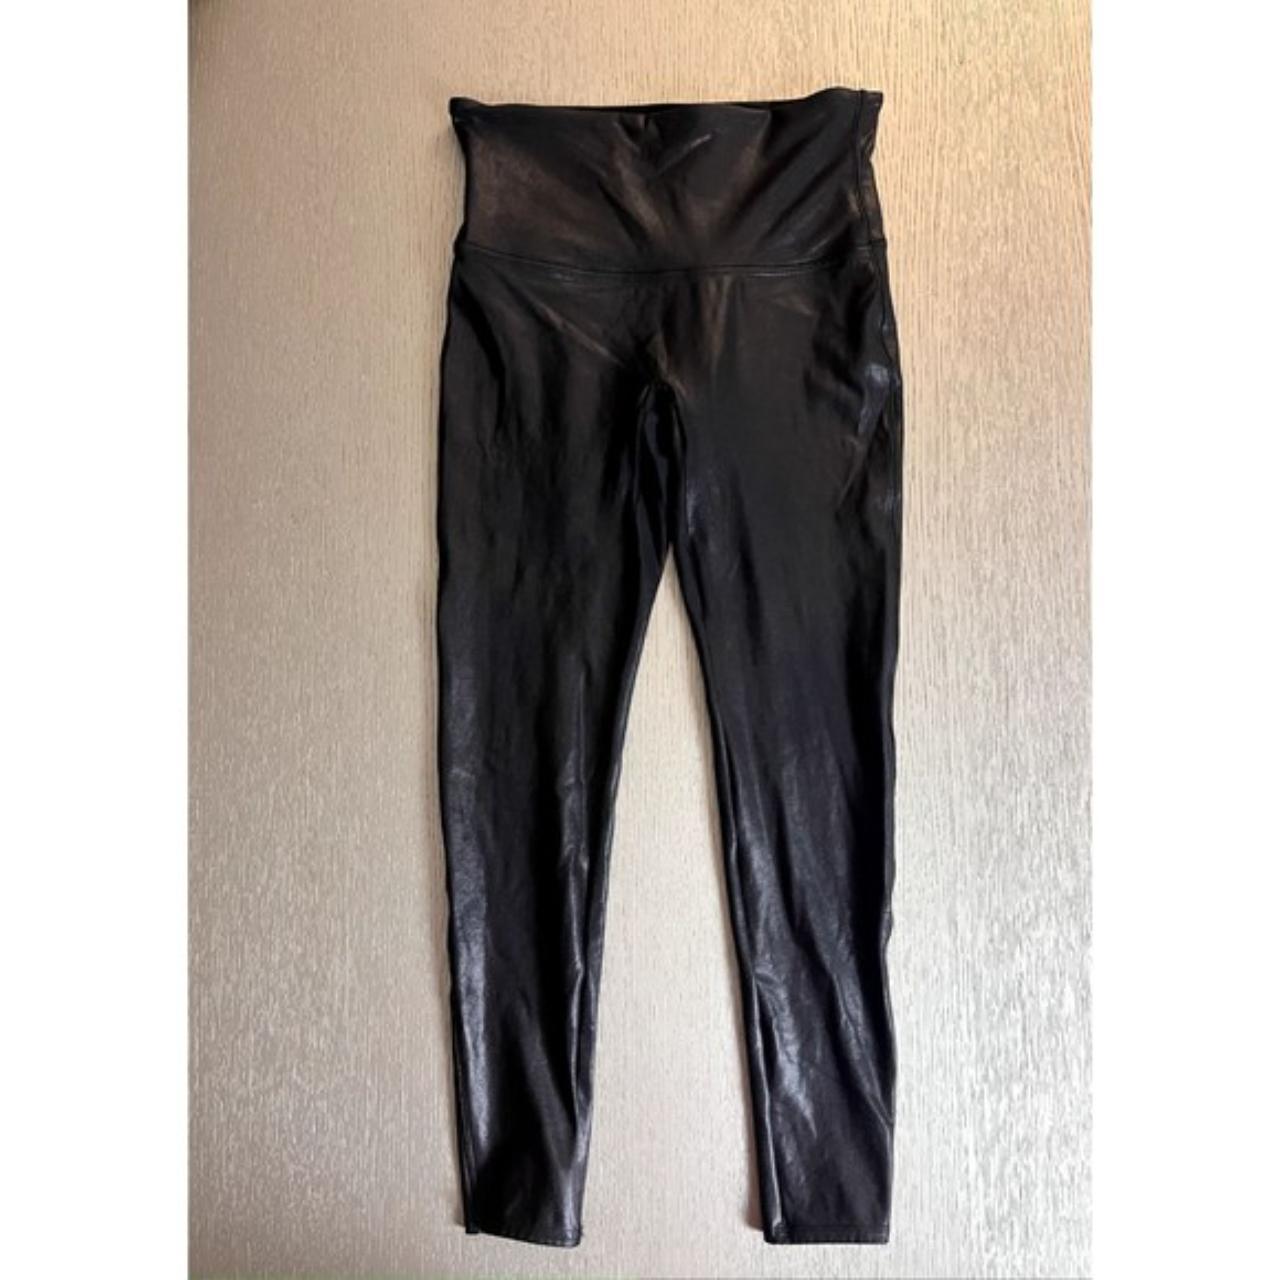 Spanx 2437 High Waist Faux Leather Black Leggings - Depop